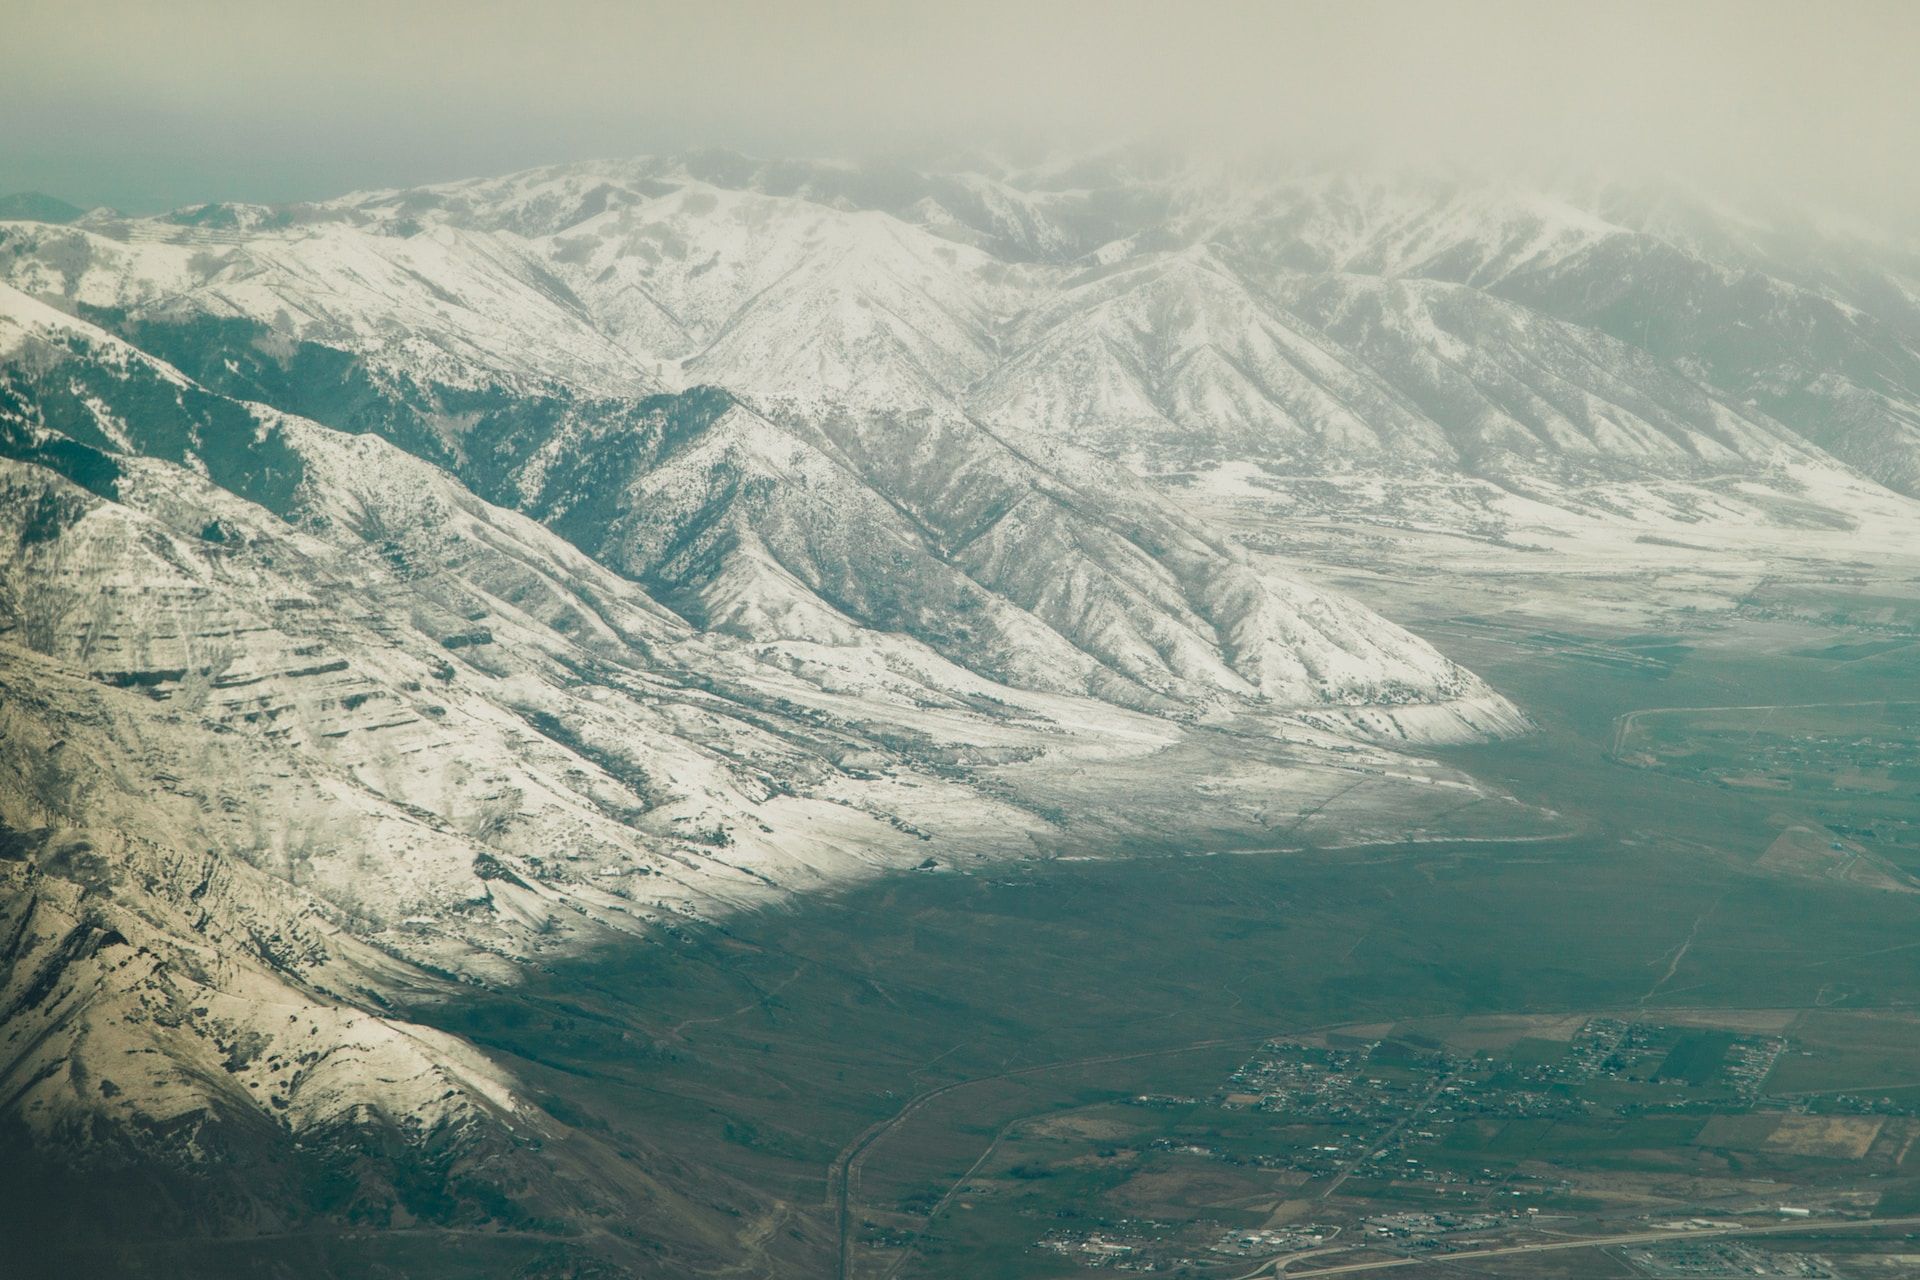 An aerial shot of snow-capped mountains surrounding Salt Lake City, Utah